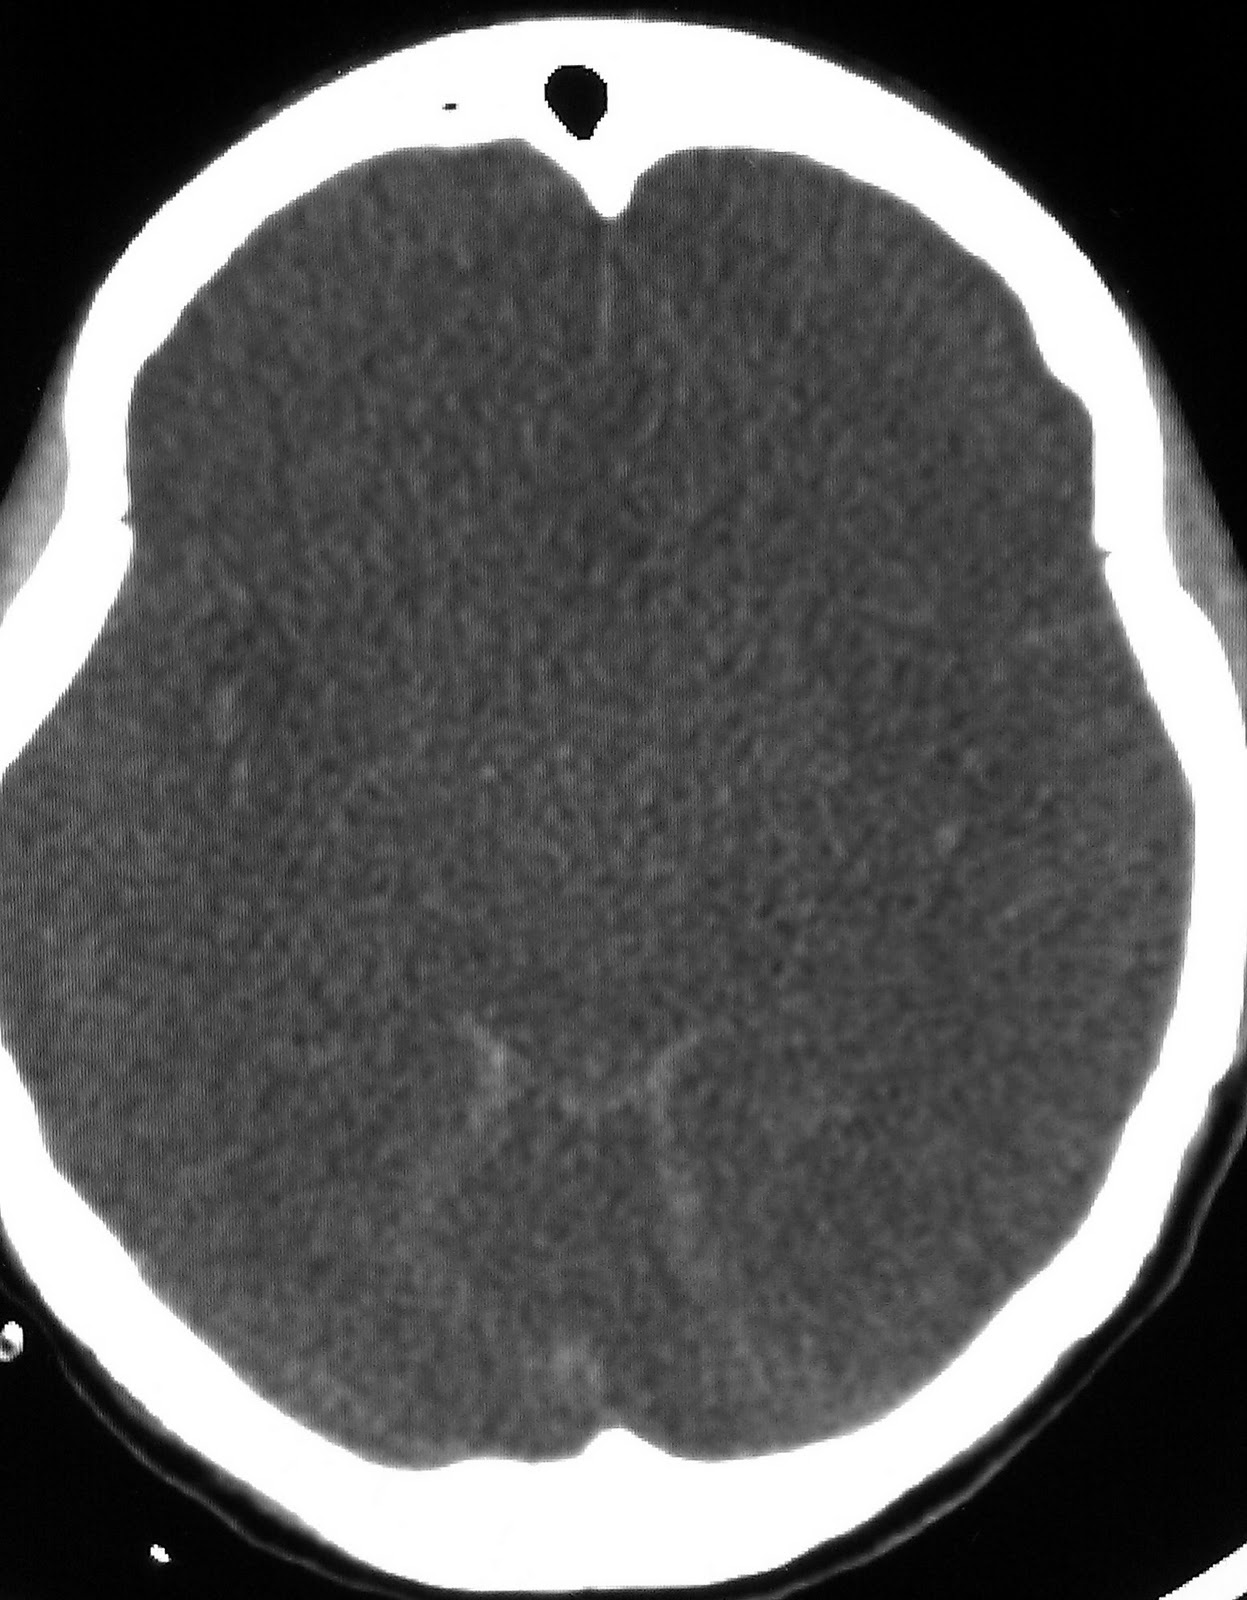 Learning Neuroradiology: Case 94 - Severe Diffuse Hypoxic Brain Injury